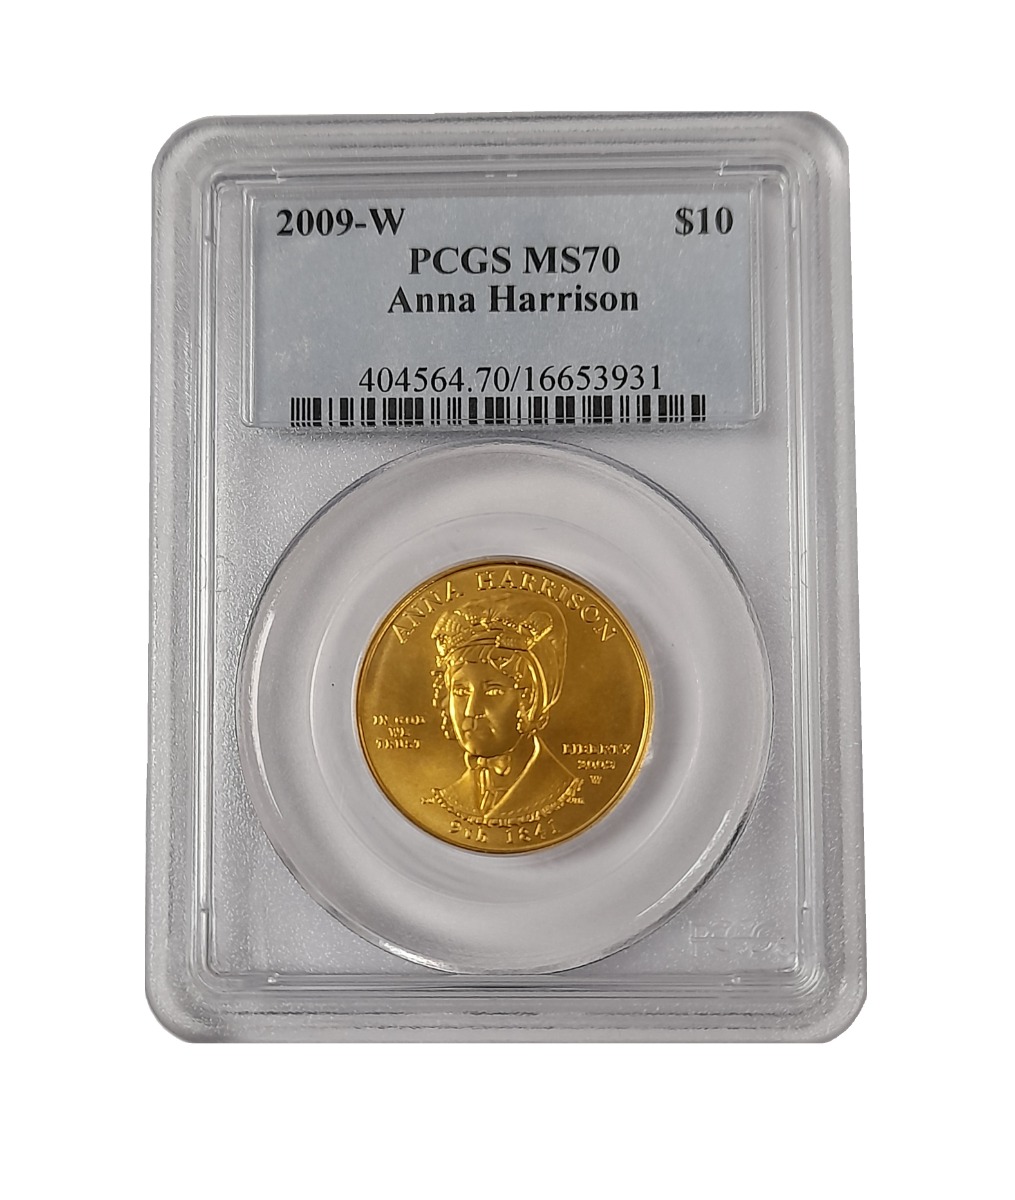 $10 Anna Harrison Gold Coin PCGS MS70 2009-W